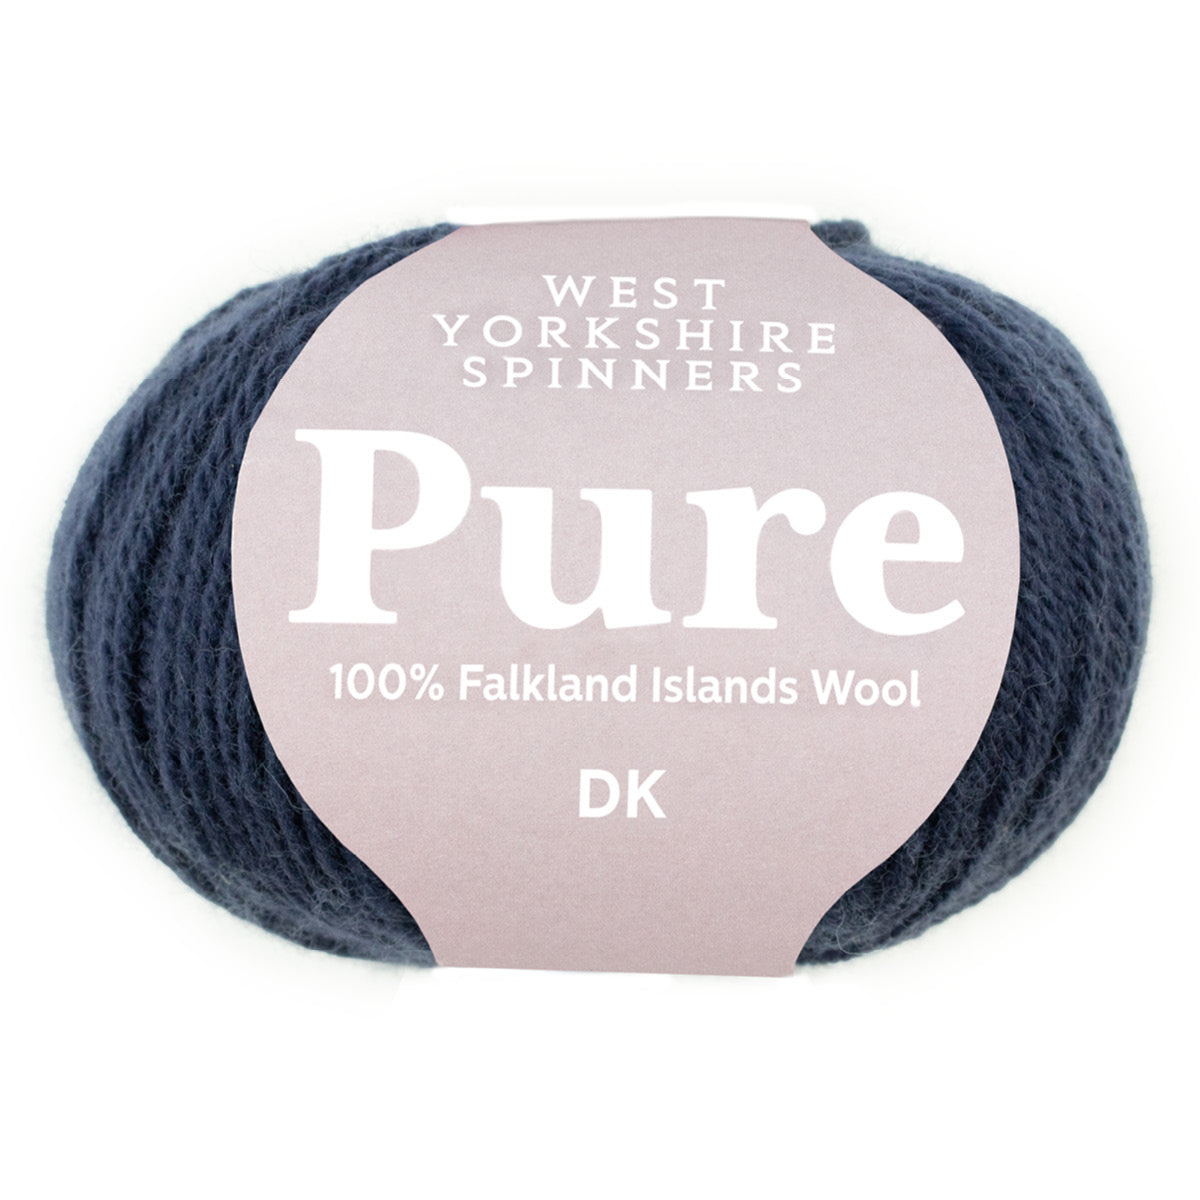 PetiteKnit Anker's Sweater Knitting Kit